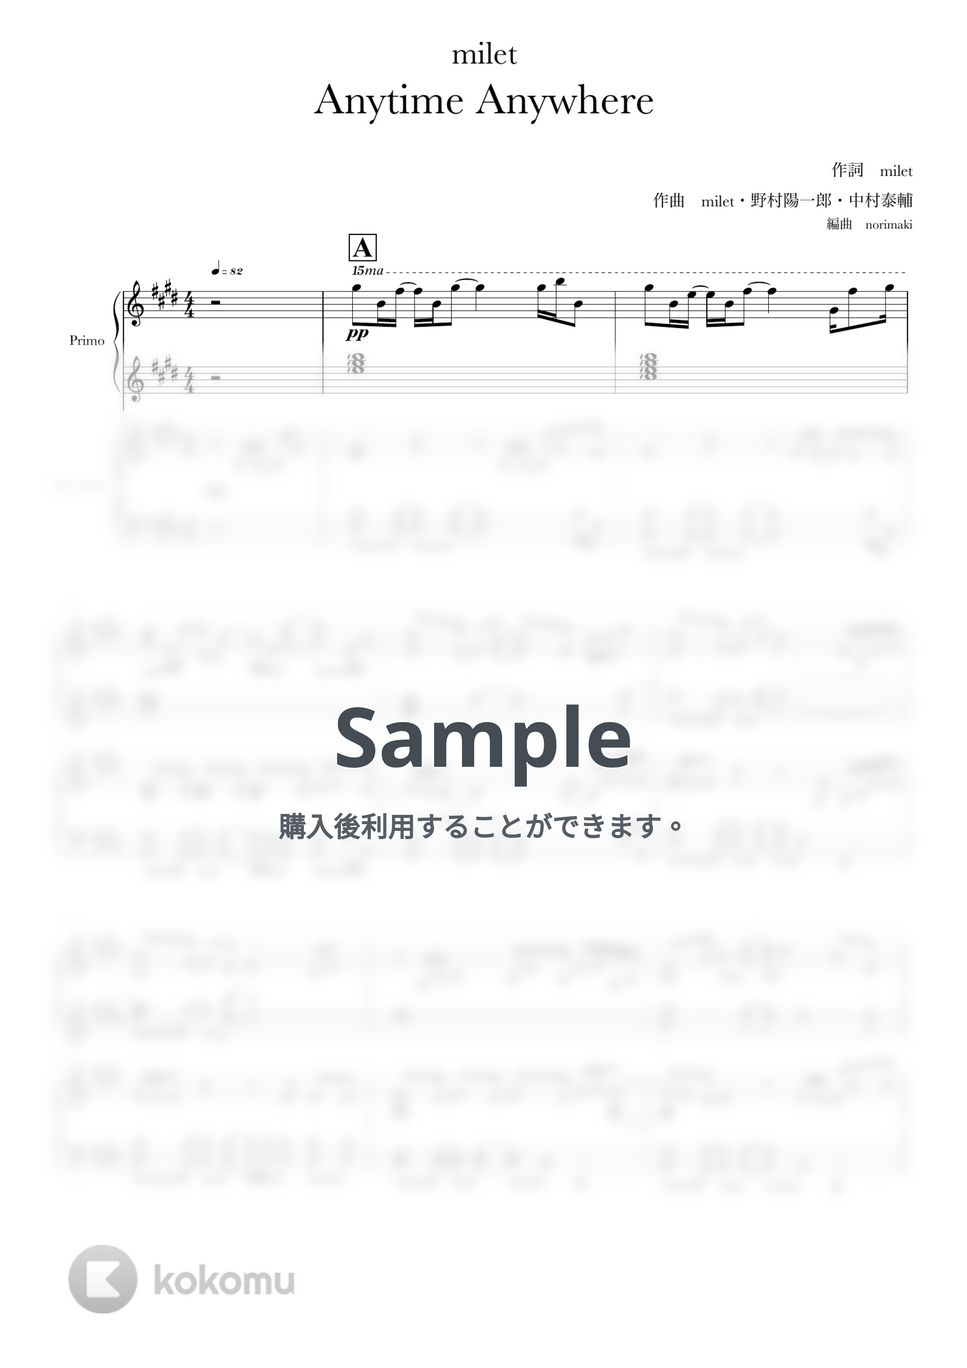 milet - Anytime Anywhere (ピアノ連弾/葬送のフリーレン) by norimaki